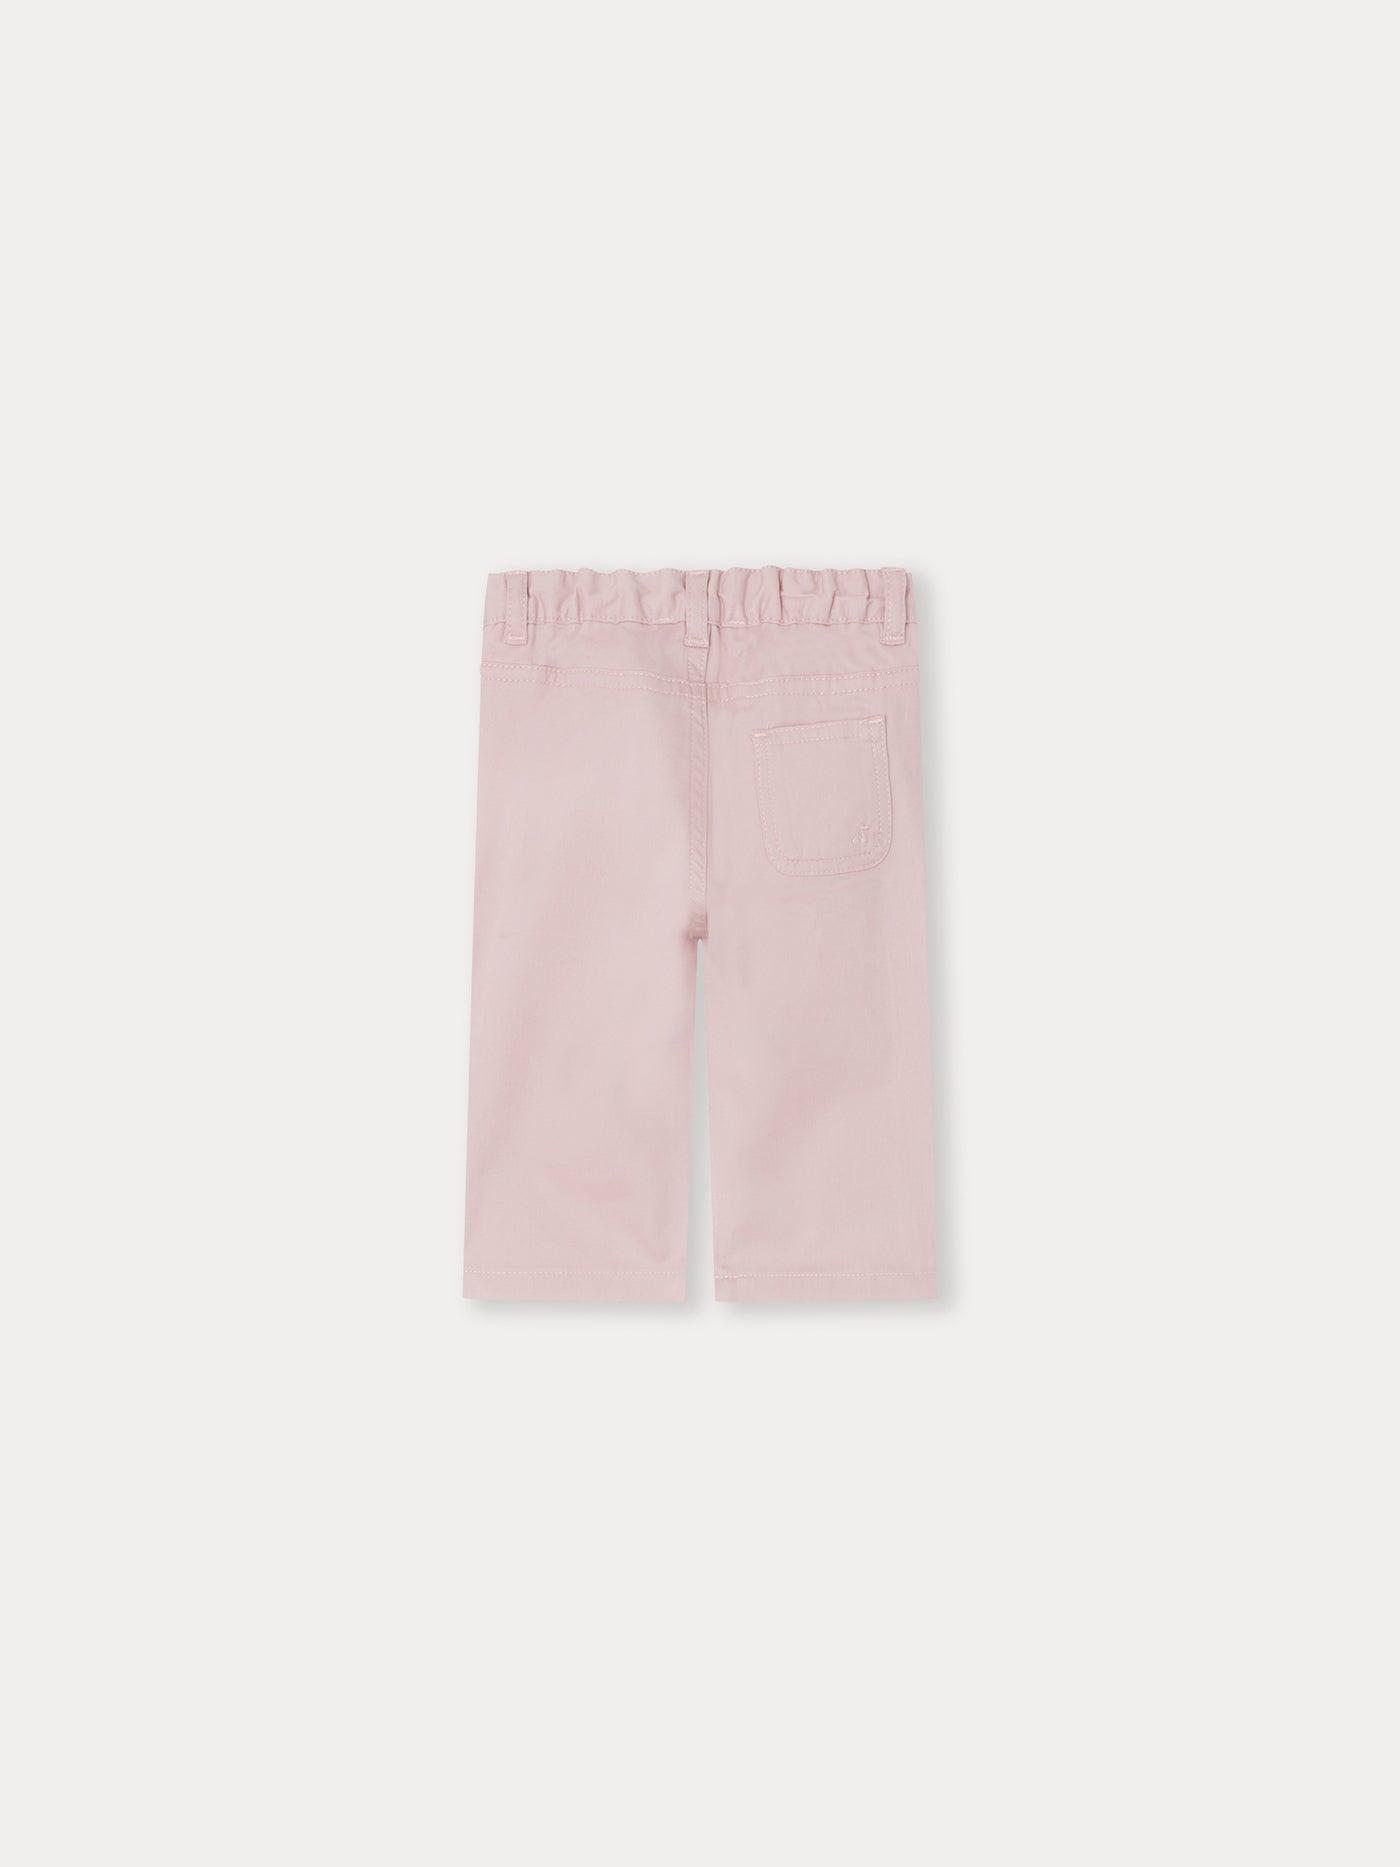 Bellino Pants faded pink